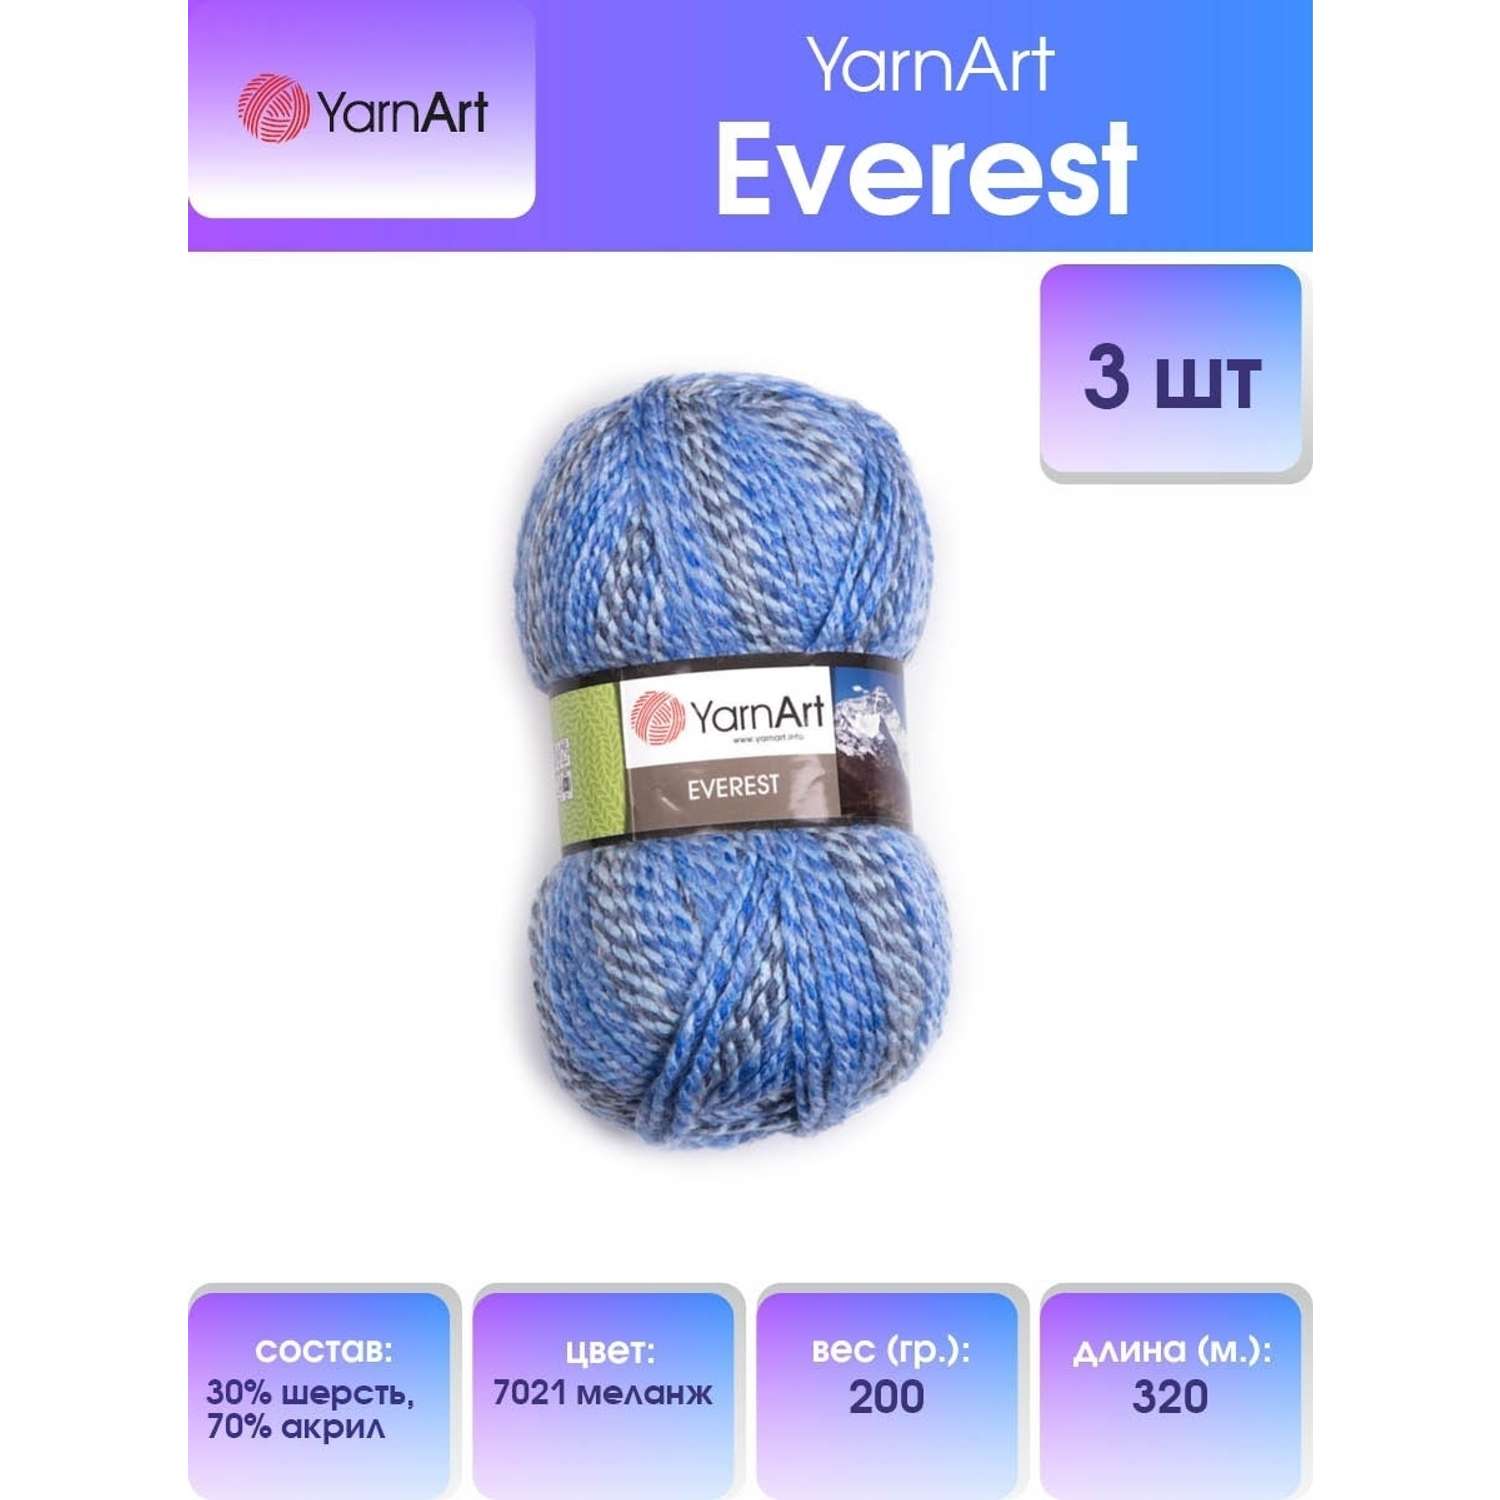 Пряжа YarnArt Everest толстая для вязания теплых вещей 200 г 320 м 7021 меланж 3 мотка - фото 1